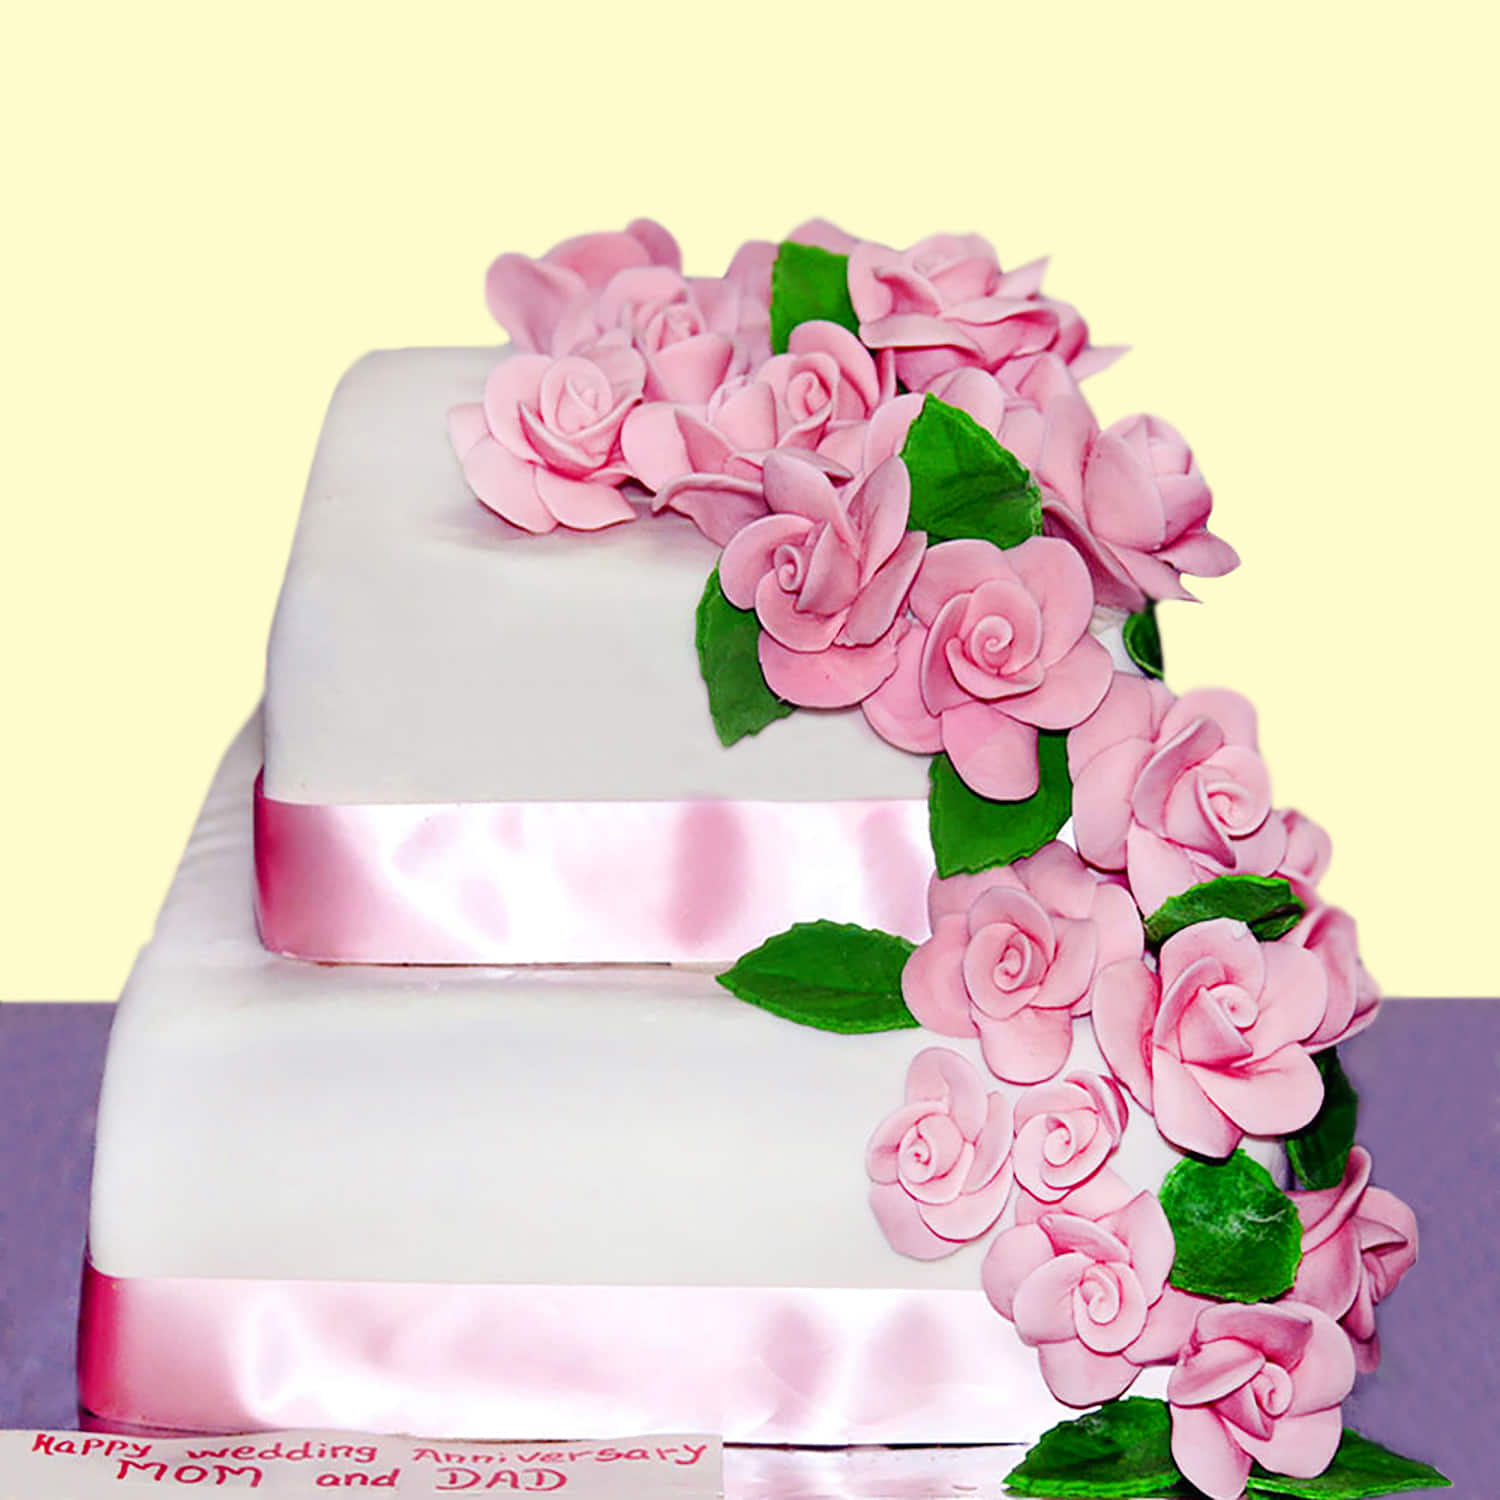 Personalised Traditional Cake Happy Wedding Day Card – Hallmark